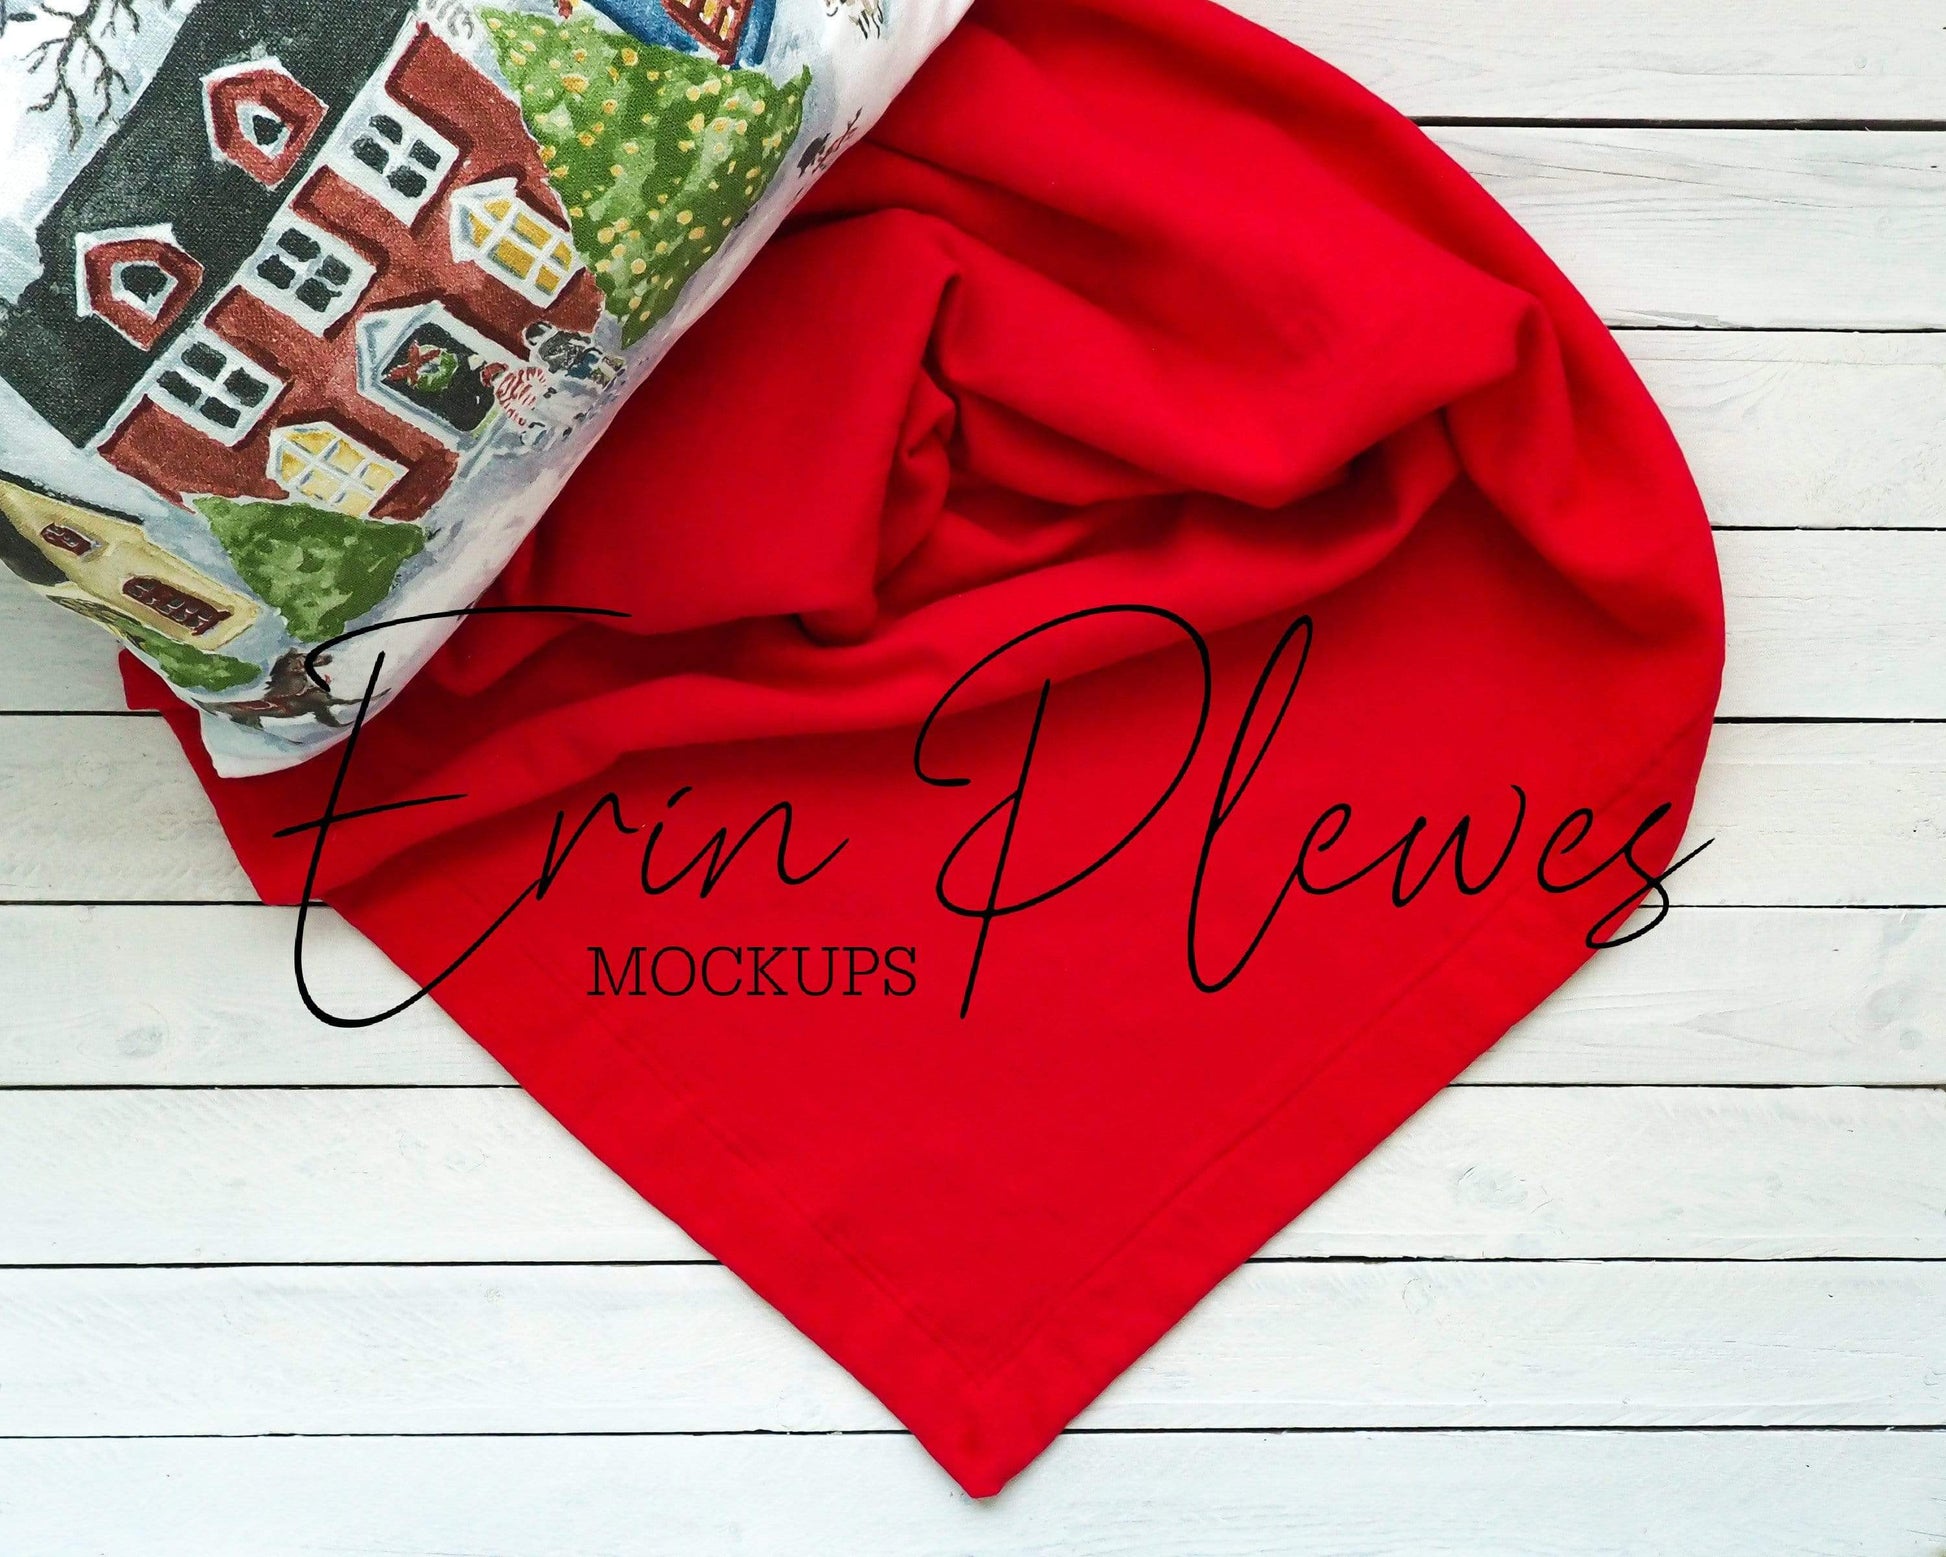 Erin Plewes Mockups Blanket Mock Up, Red Blanket Mockup with Christmas Pillow, Gildan Stadium Blanket Template, Red Blanket Flat Lay Jpeg